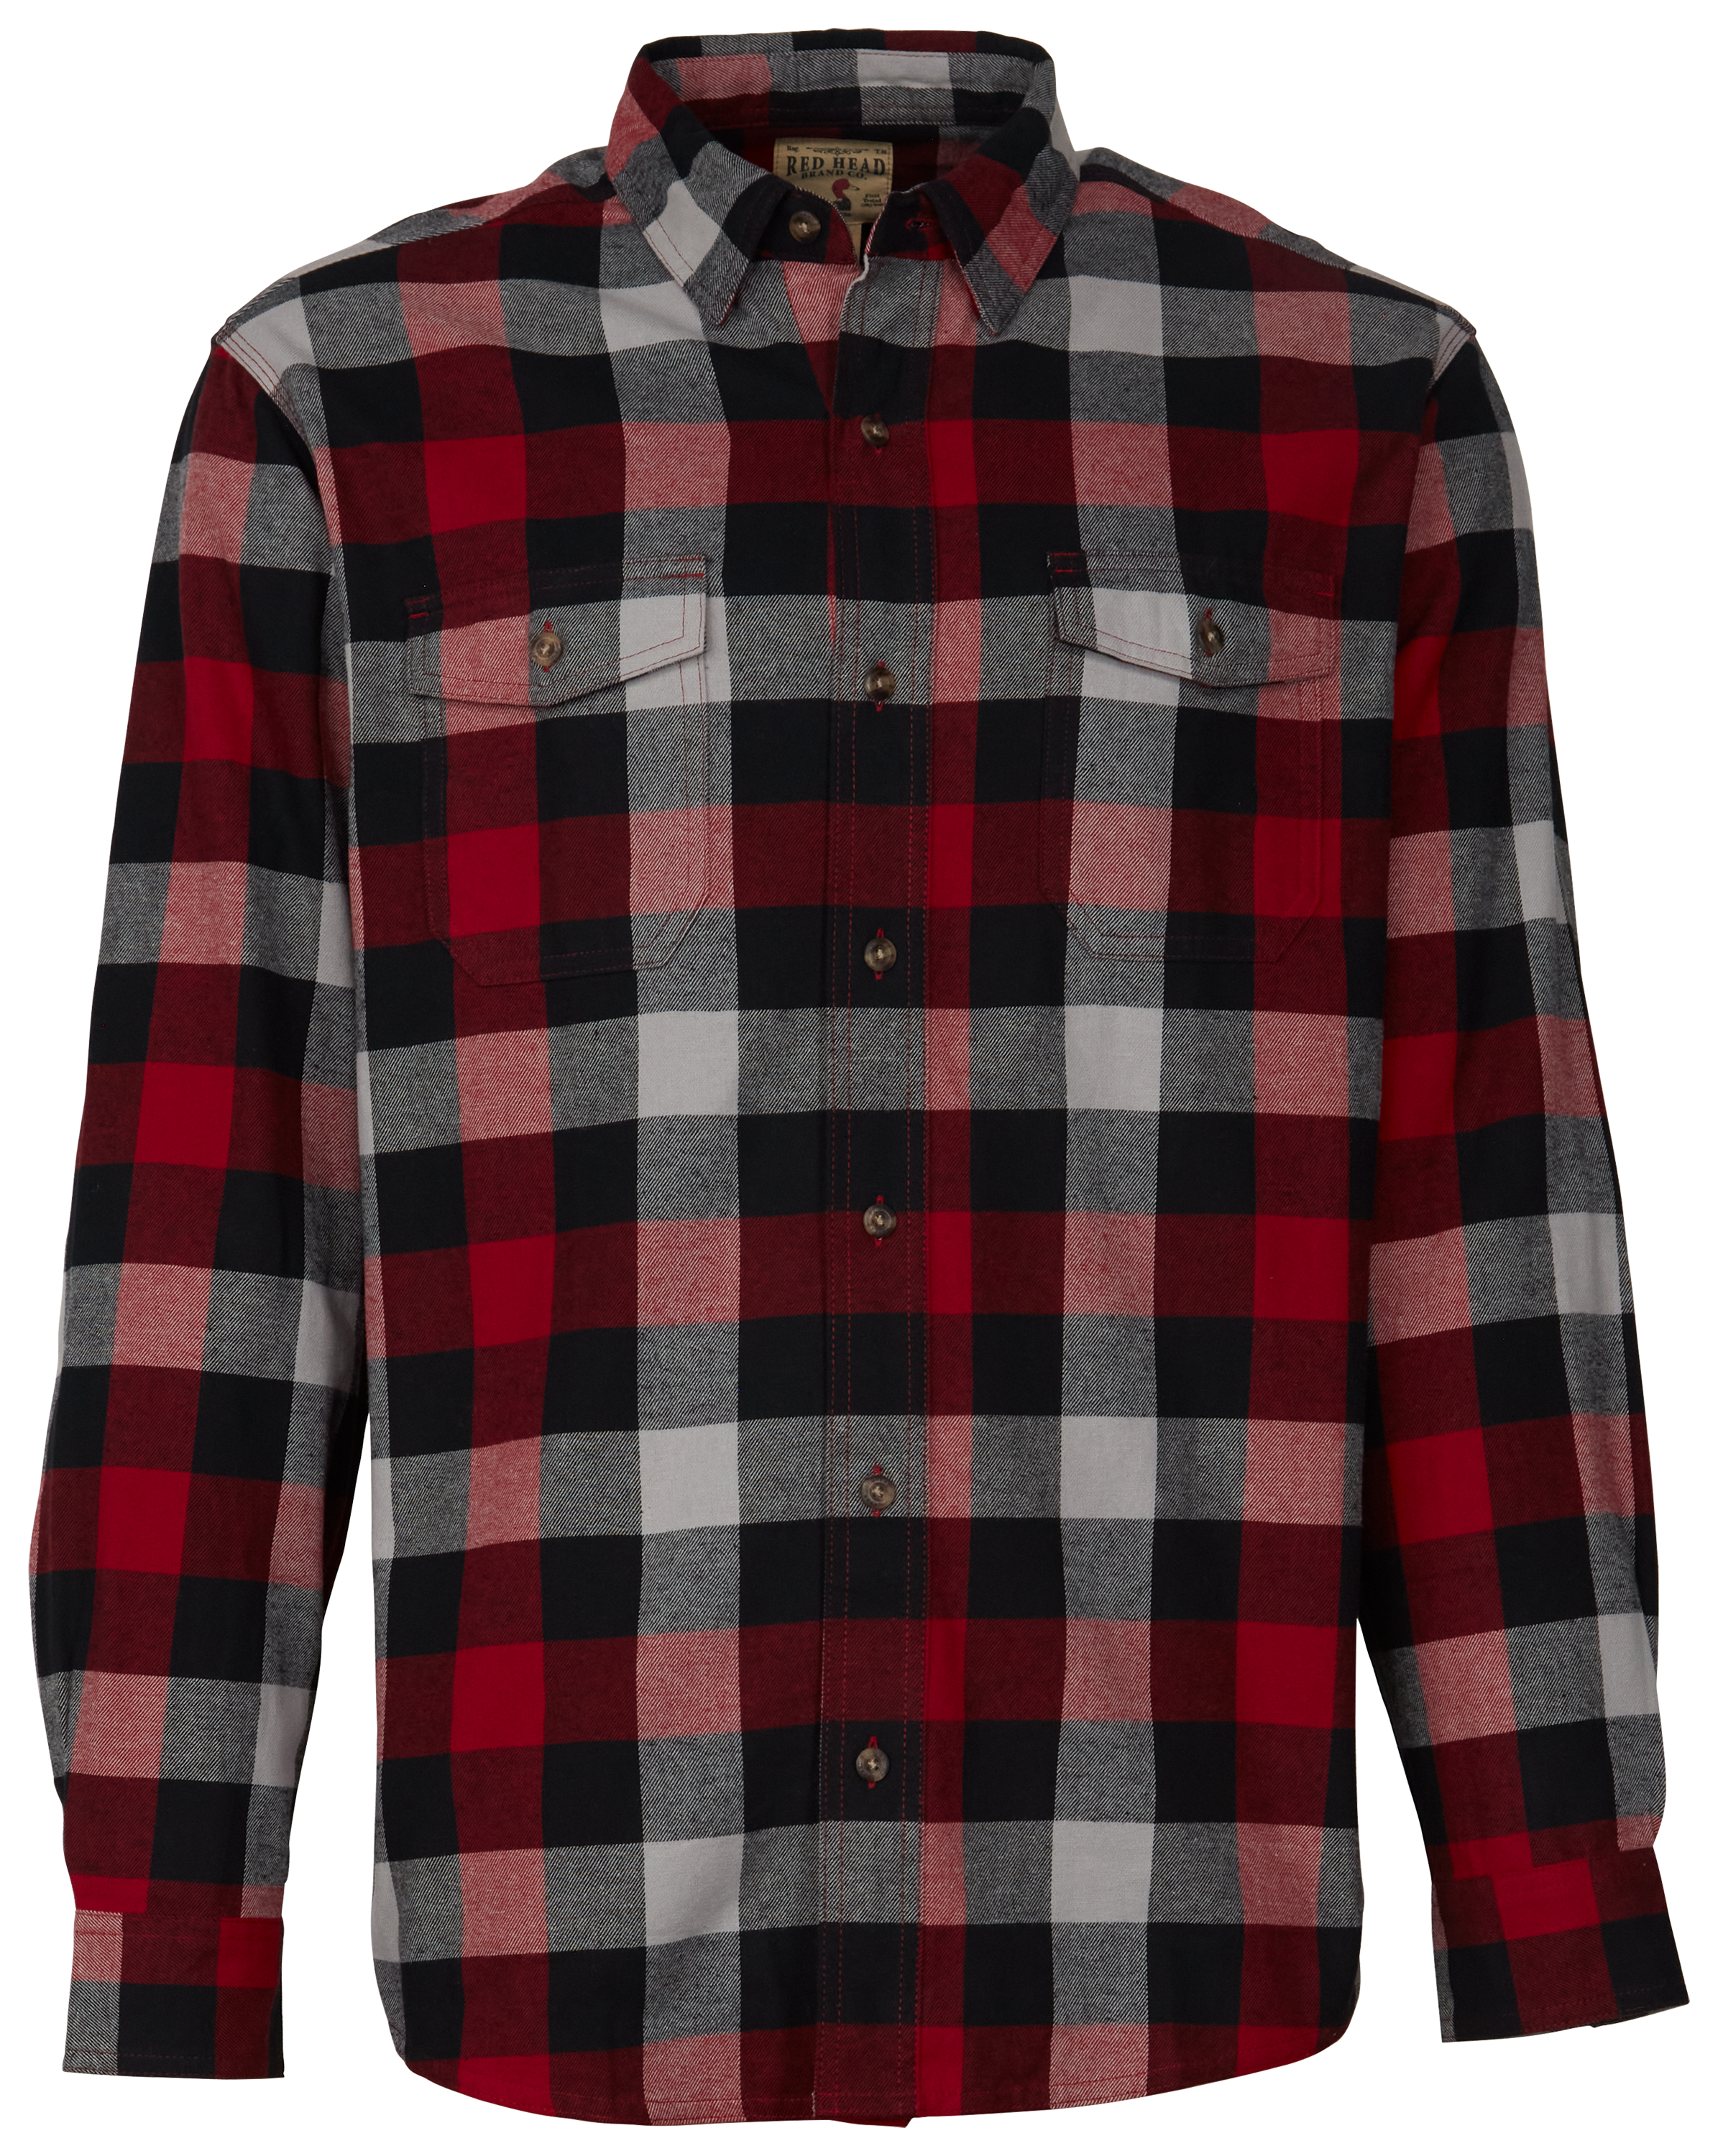 RedHead Buffalo Creek Flannel Long-Sleeve Shirt for Men - Red/Gray - L